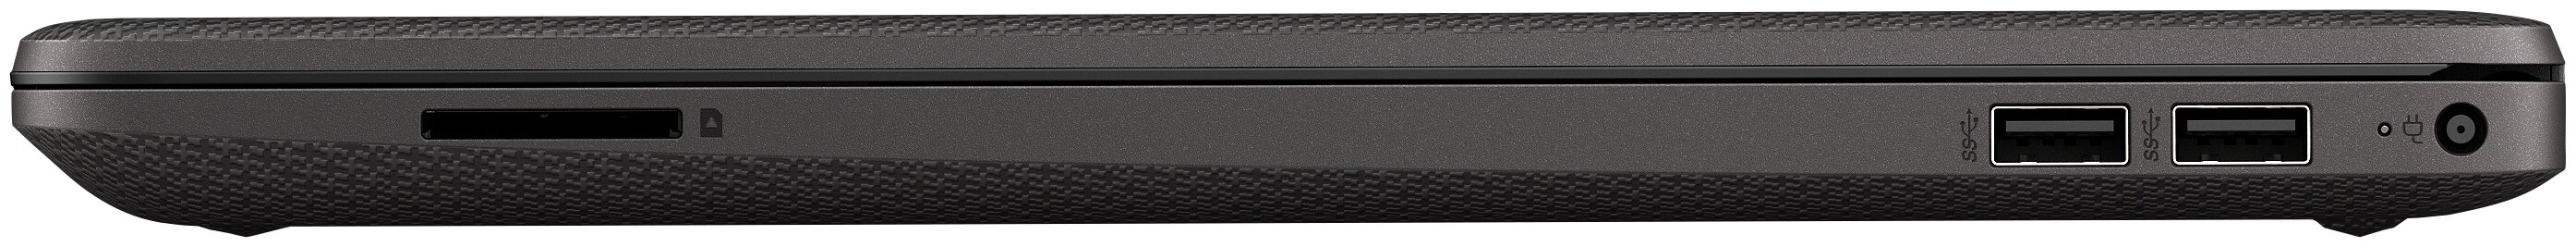 15.6" HP 255 G8 - разъемы: USB 3.1 Type A x 2, USB 3.1 Type-С, выход HDMI, микрофон/наушники Combo, Ethernet - RJ-45